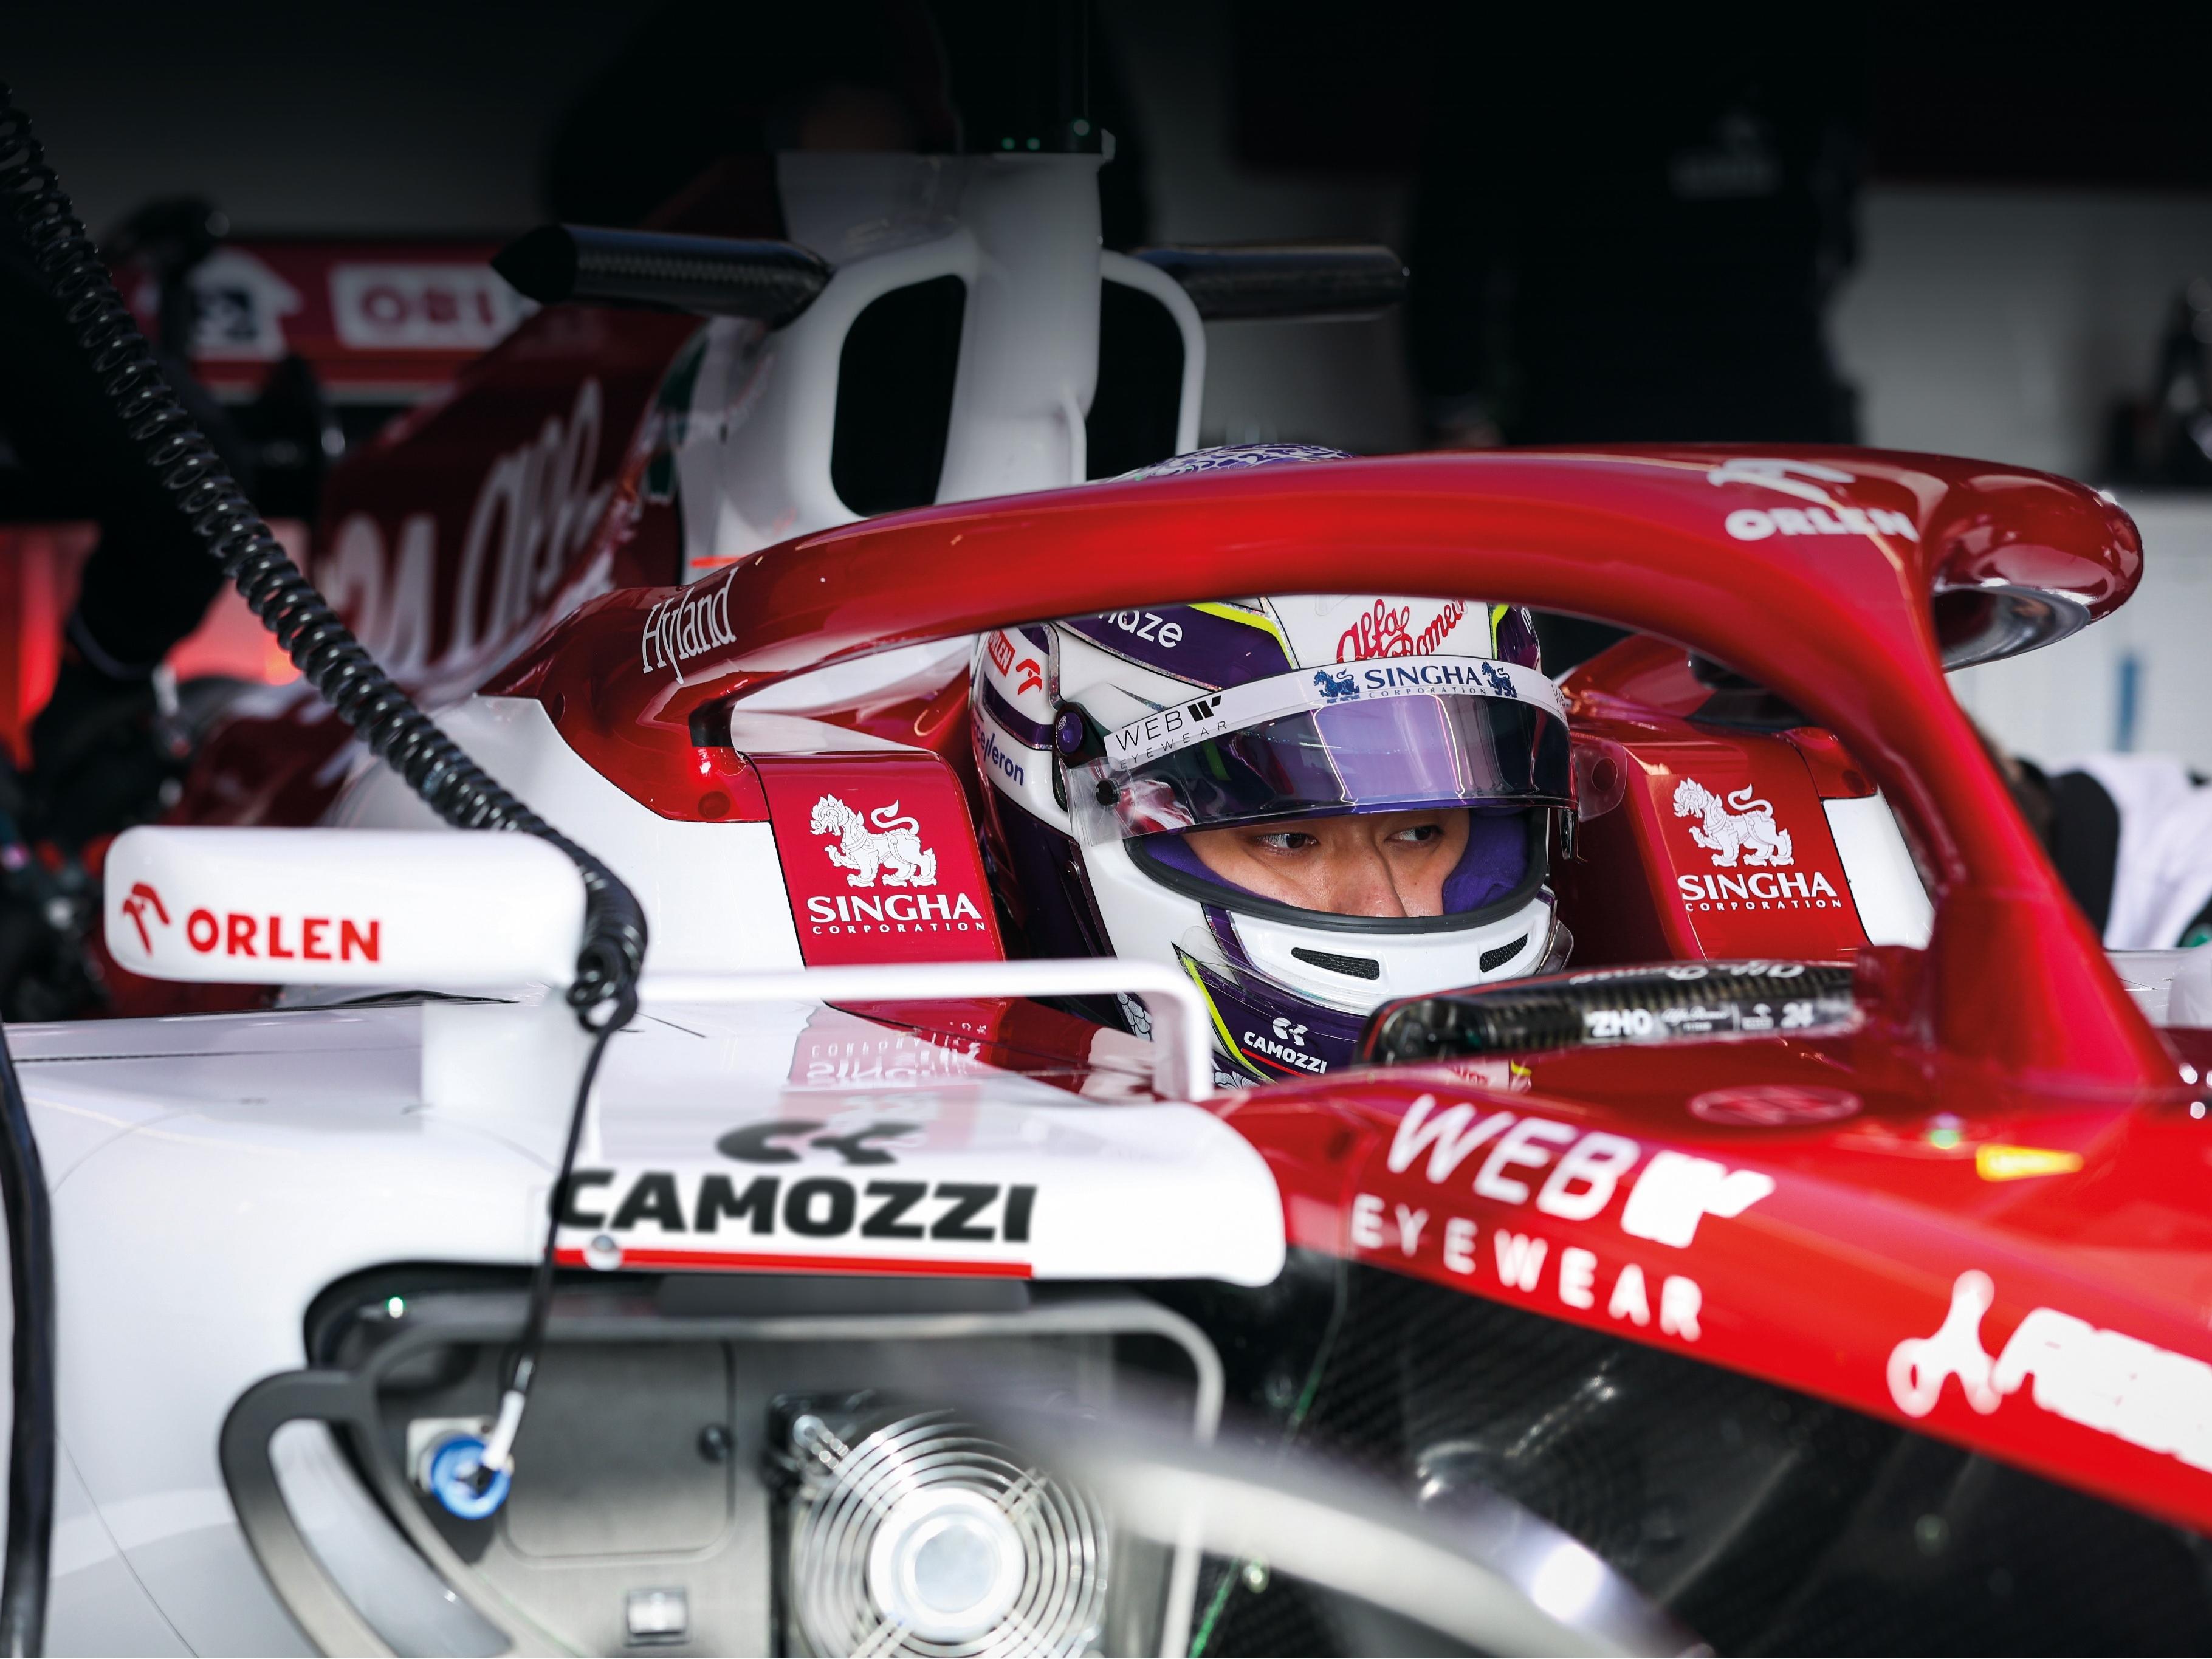 Camozzi and Alfa Romeo F1 Team Orlen hit the track in unison